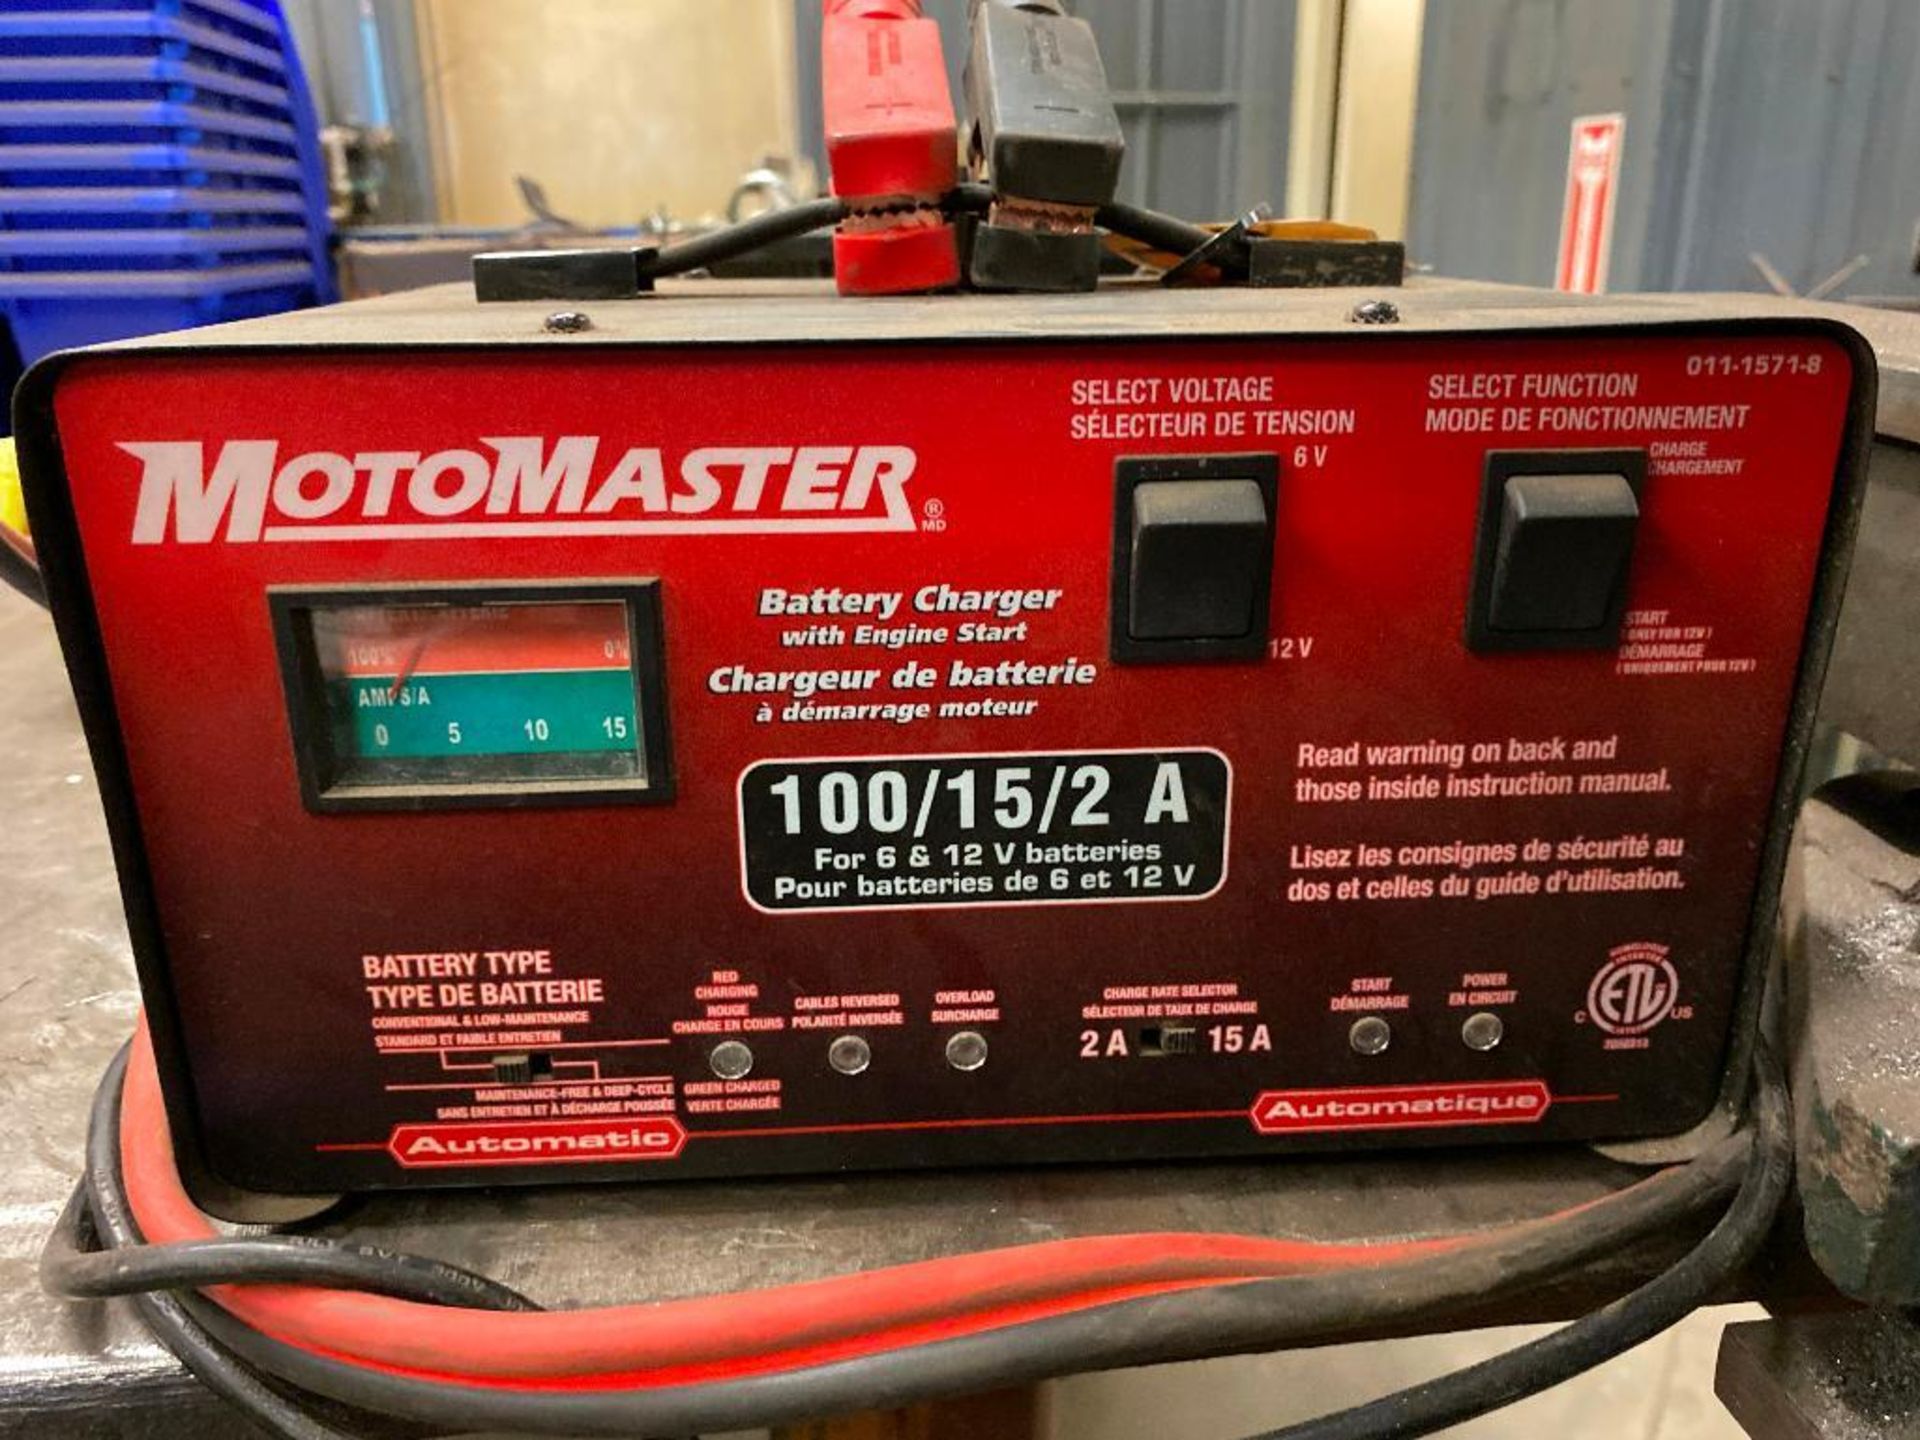 Motomaster 6/12V Battery Charger - Image 3 of 3